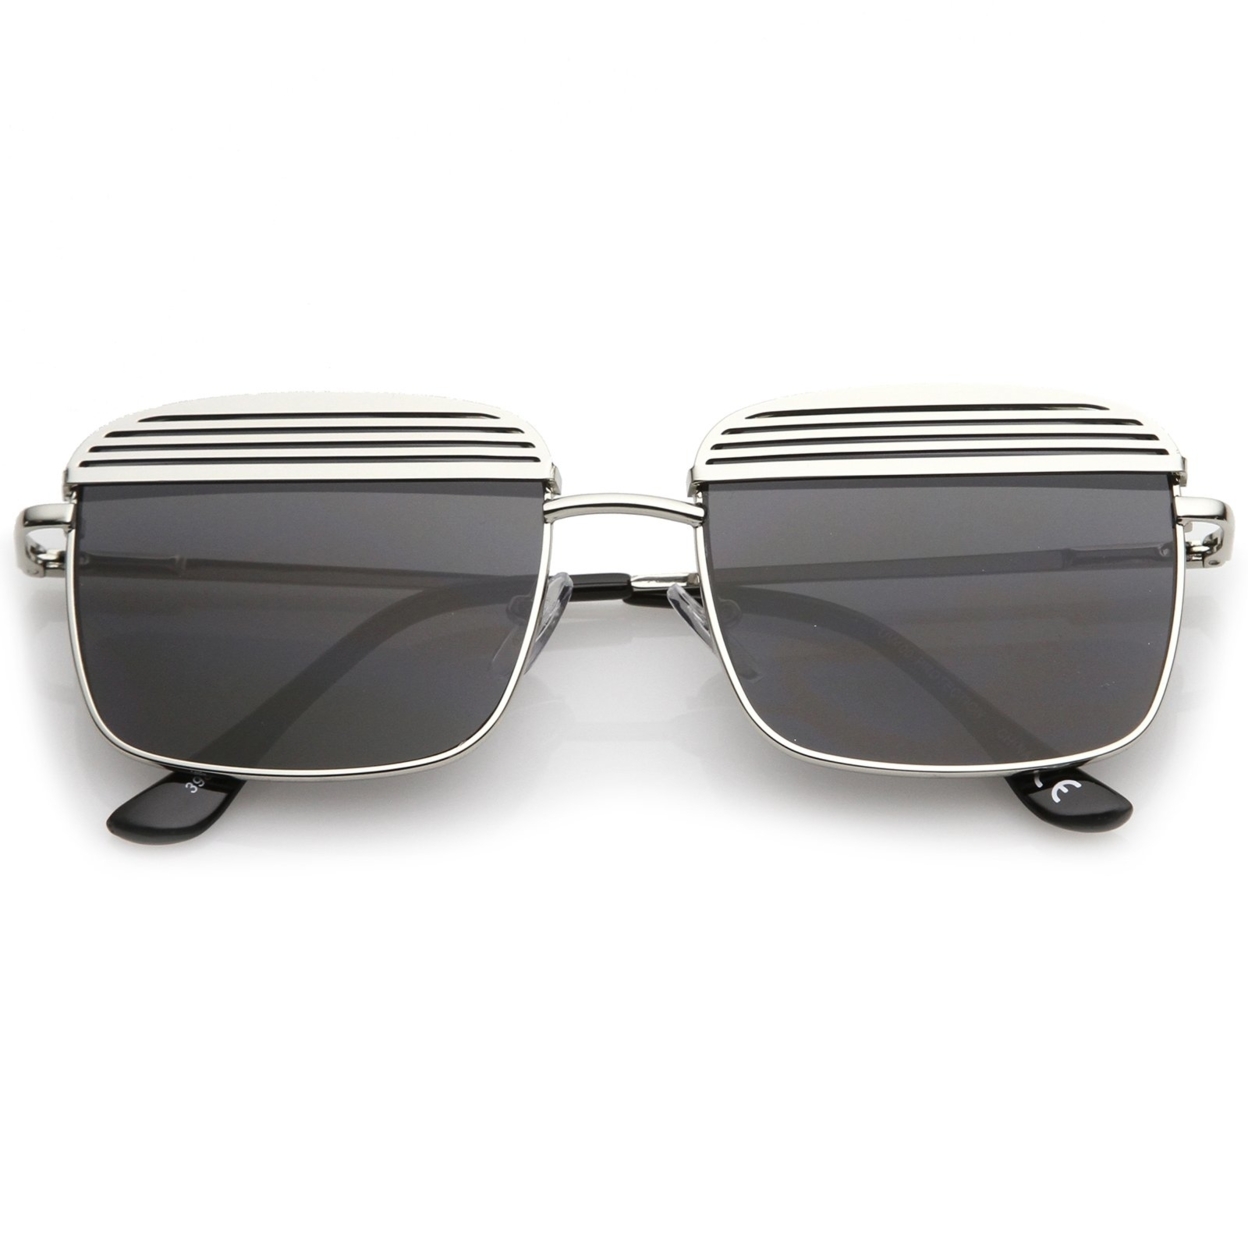 Modern Ultra Slim Arms Metal Cover Super Flat Lens Square Sunglasses 53mm - Shiny Silver / Smoke